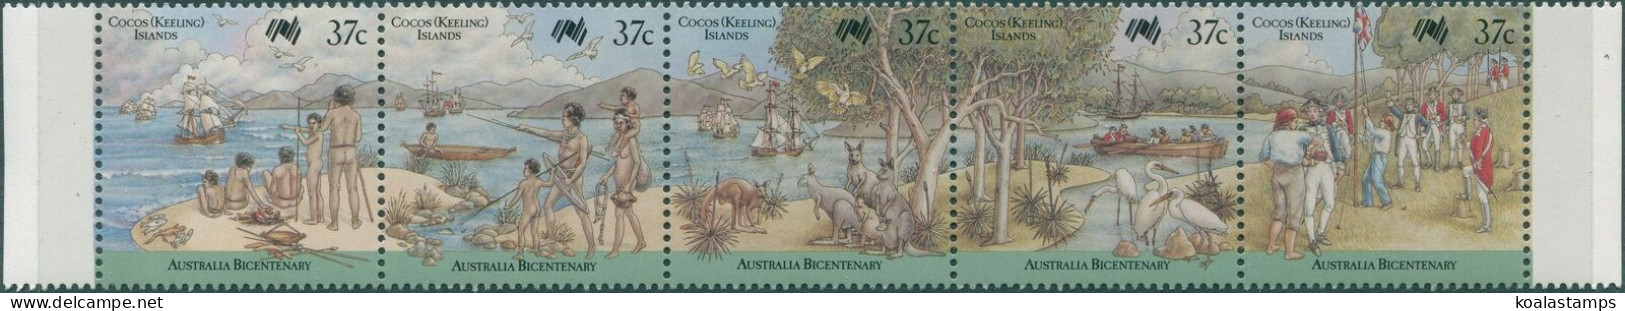 Cocos Islands 1988 SG175-179 Australia Bicentenary Set MNH - Cocos (Keeling) Islands